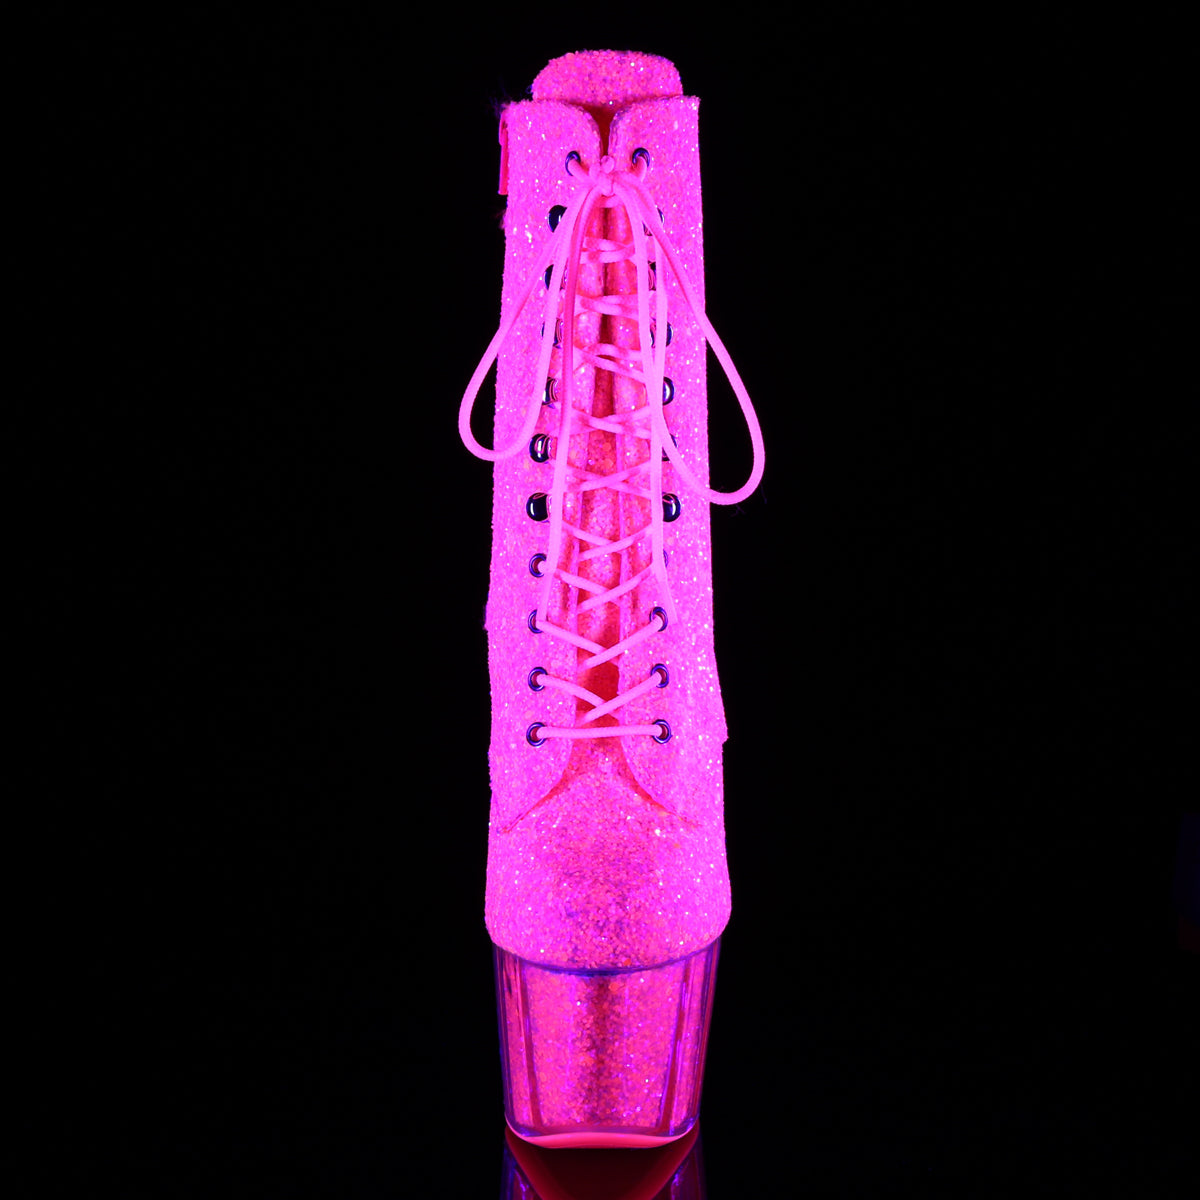 ADORE-1020G Neon Pink Glitter/Neon Pink Glitter Ankle Boot Pleaser